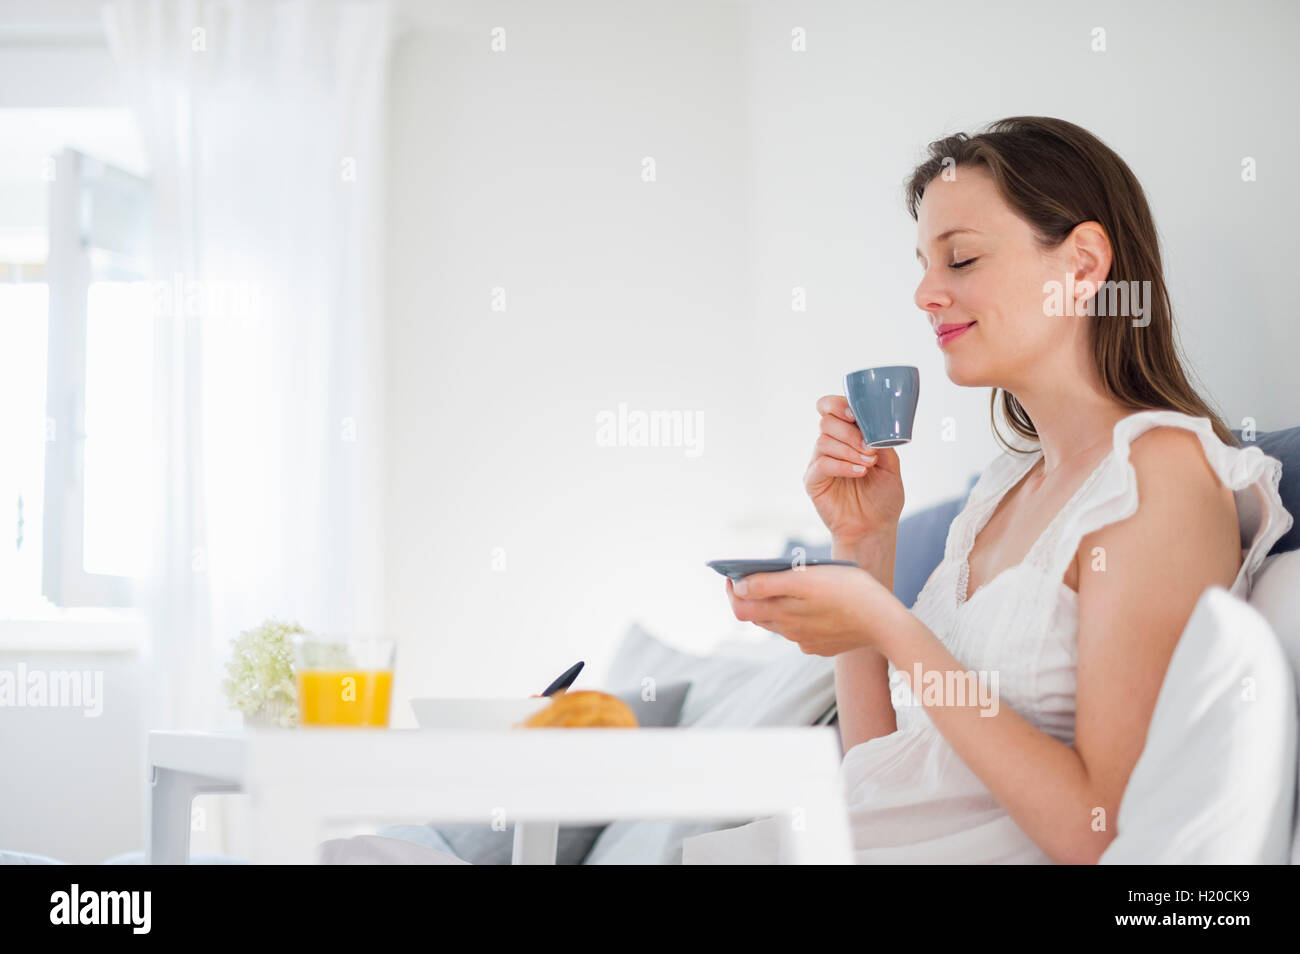 Frau im Bett mit Frühstückstablett Stockfoto